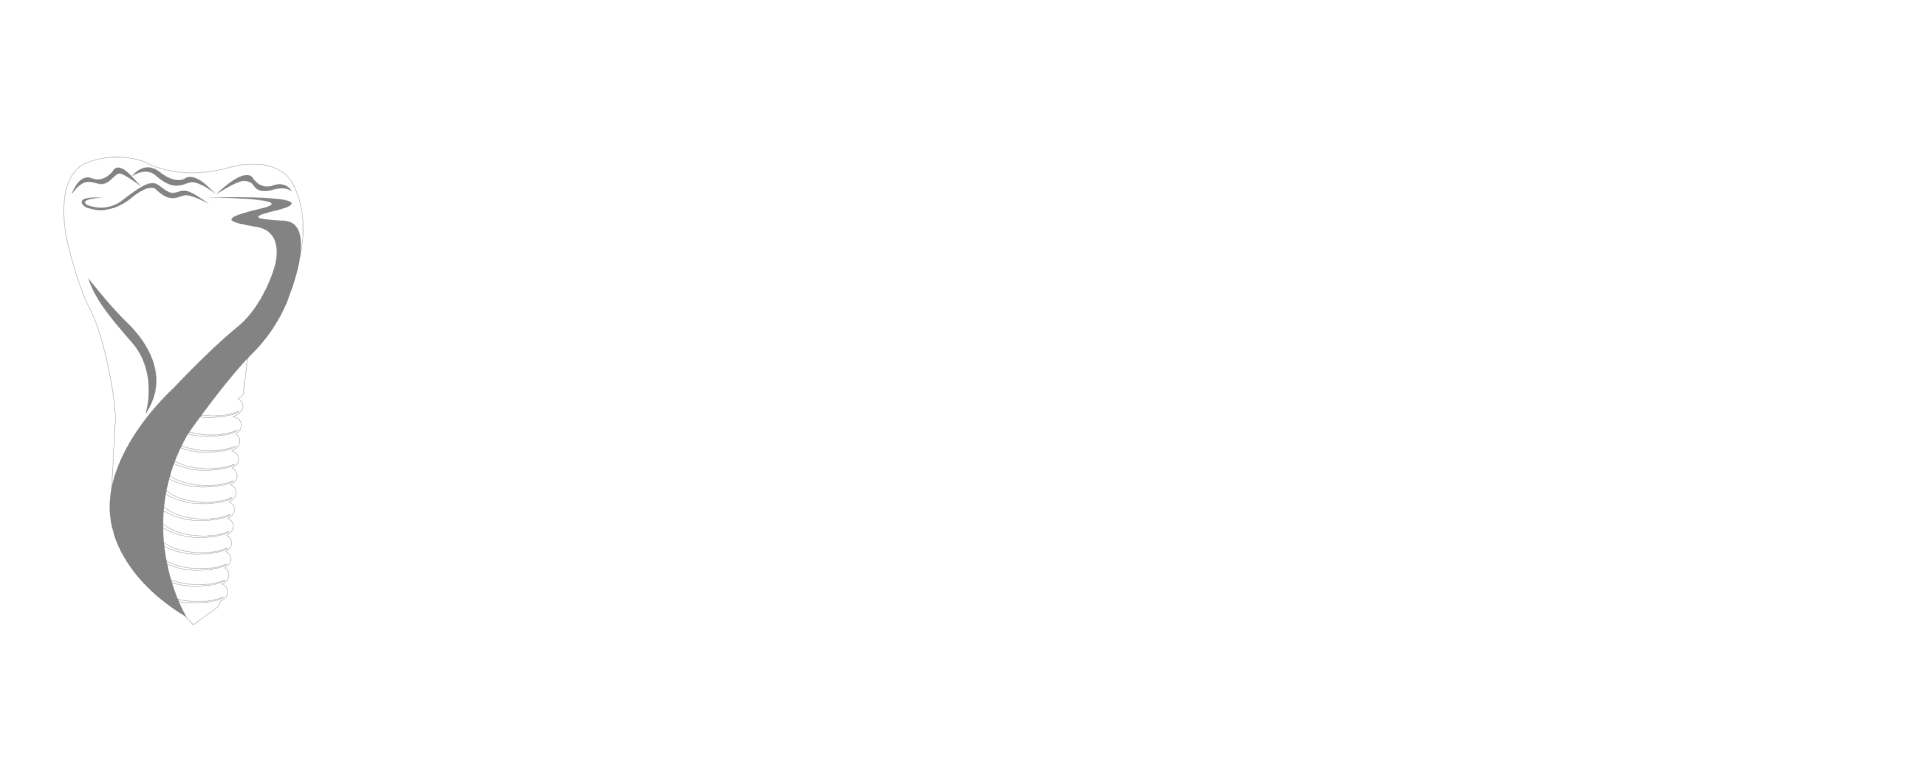 parkway restorative dentistry logo asheville nc